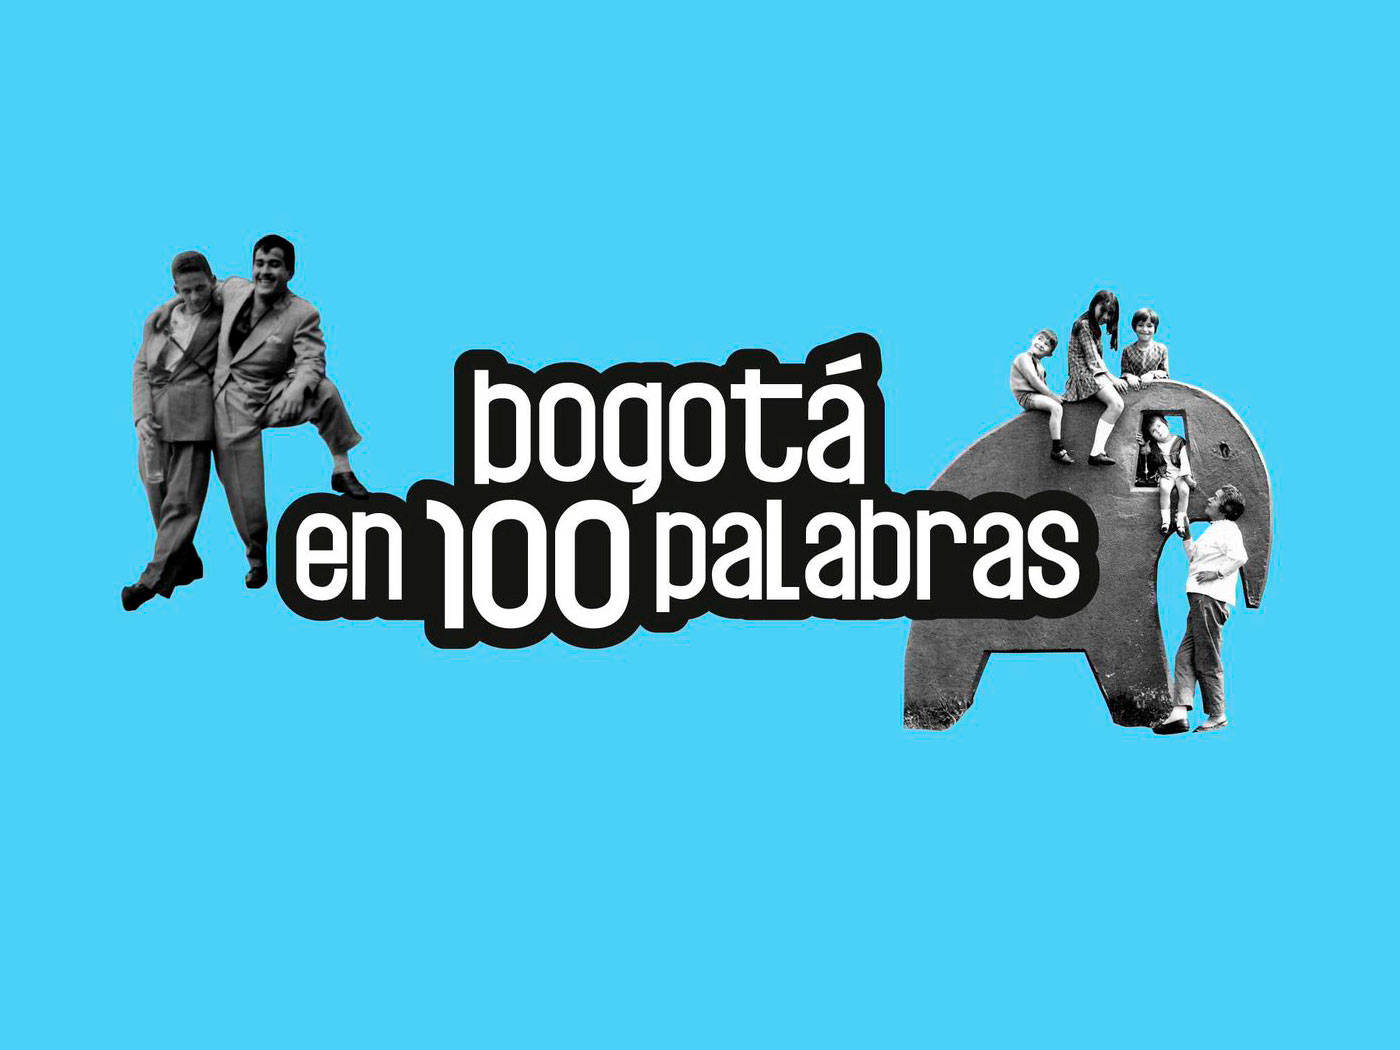 Se abre la convocatoria Bogotá a 100 palabras